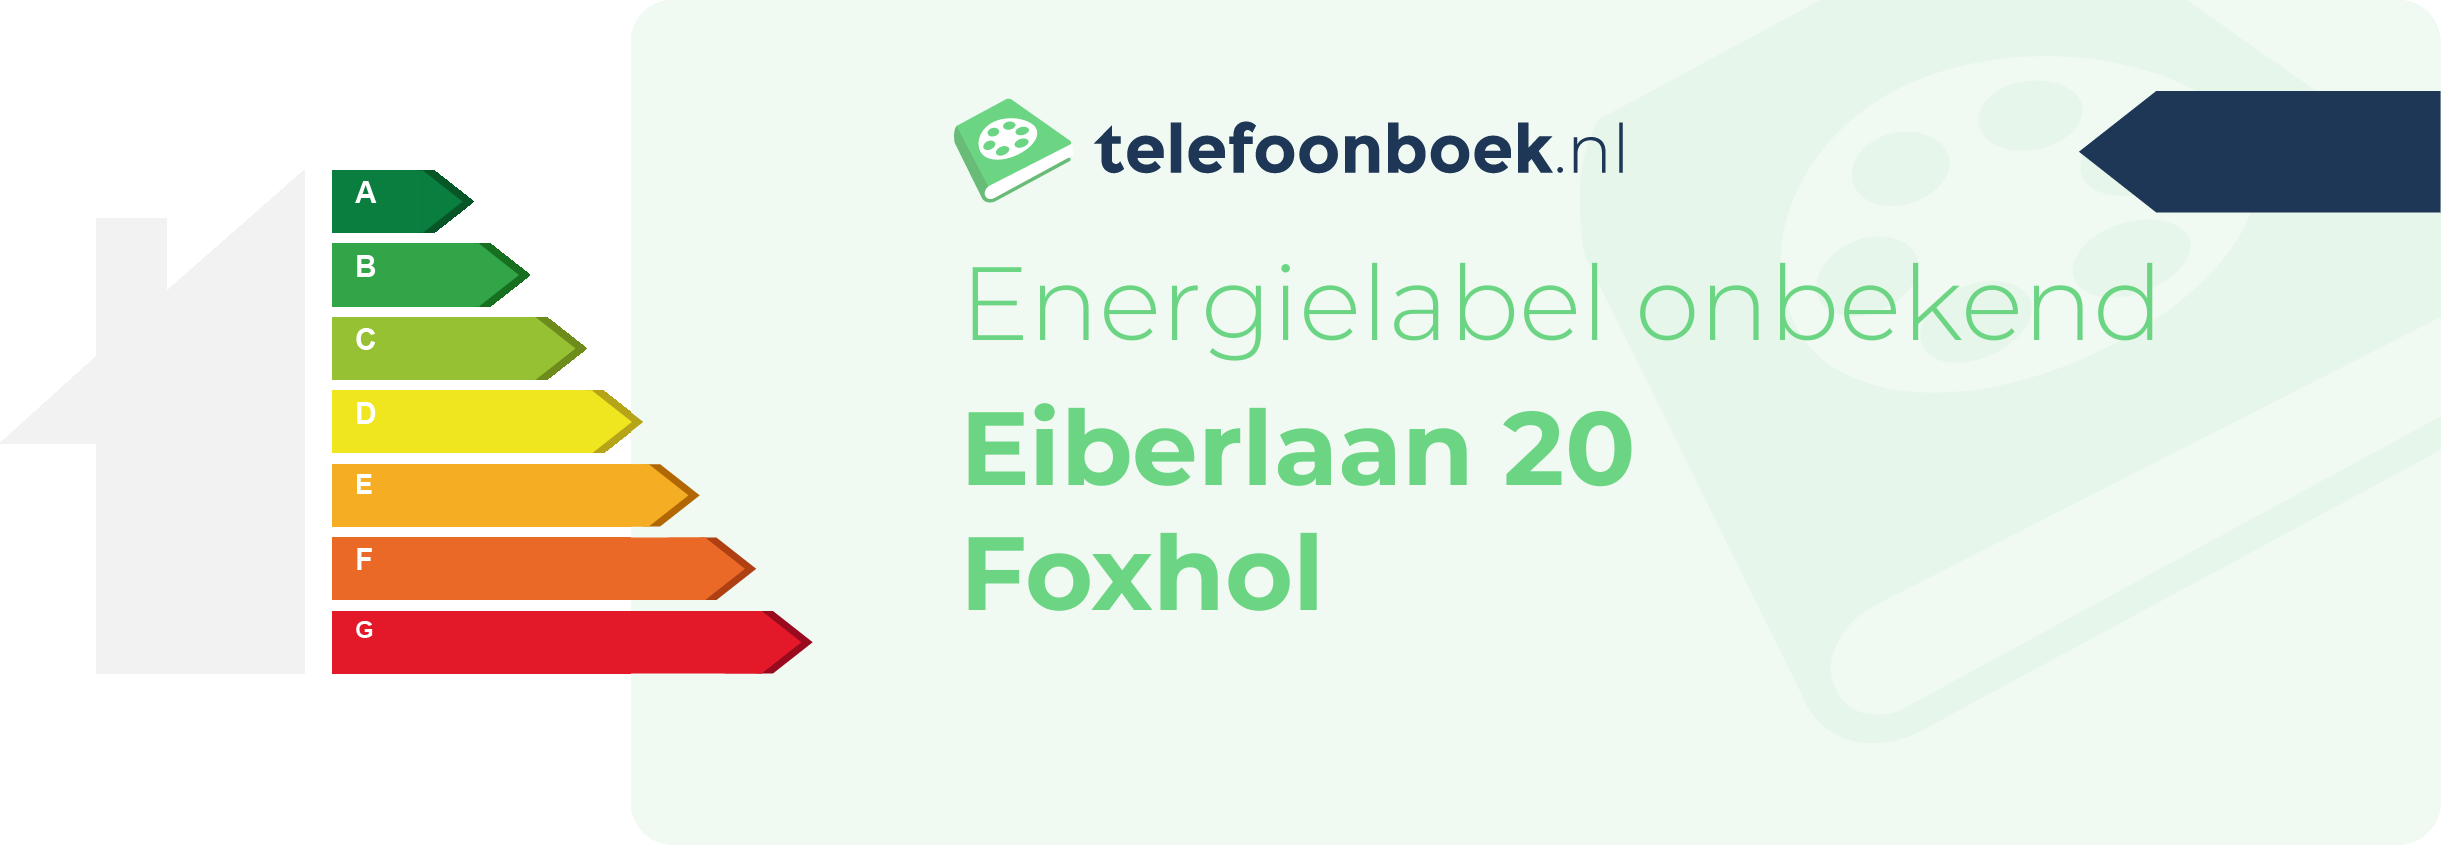 Energielabel Eiberlaan 20 Foxhol